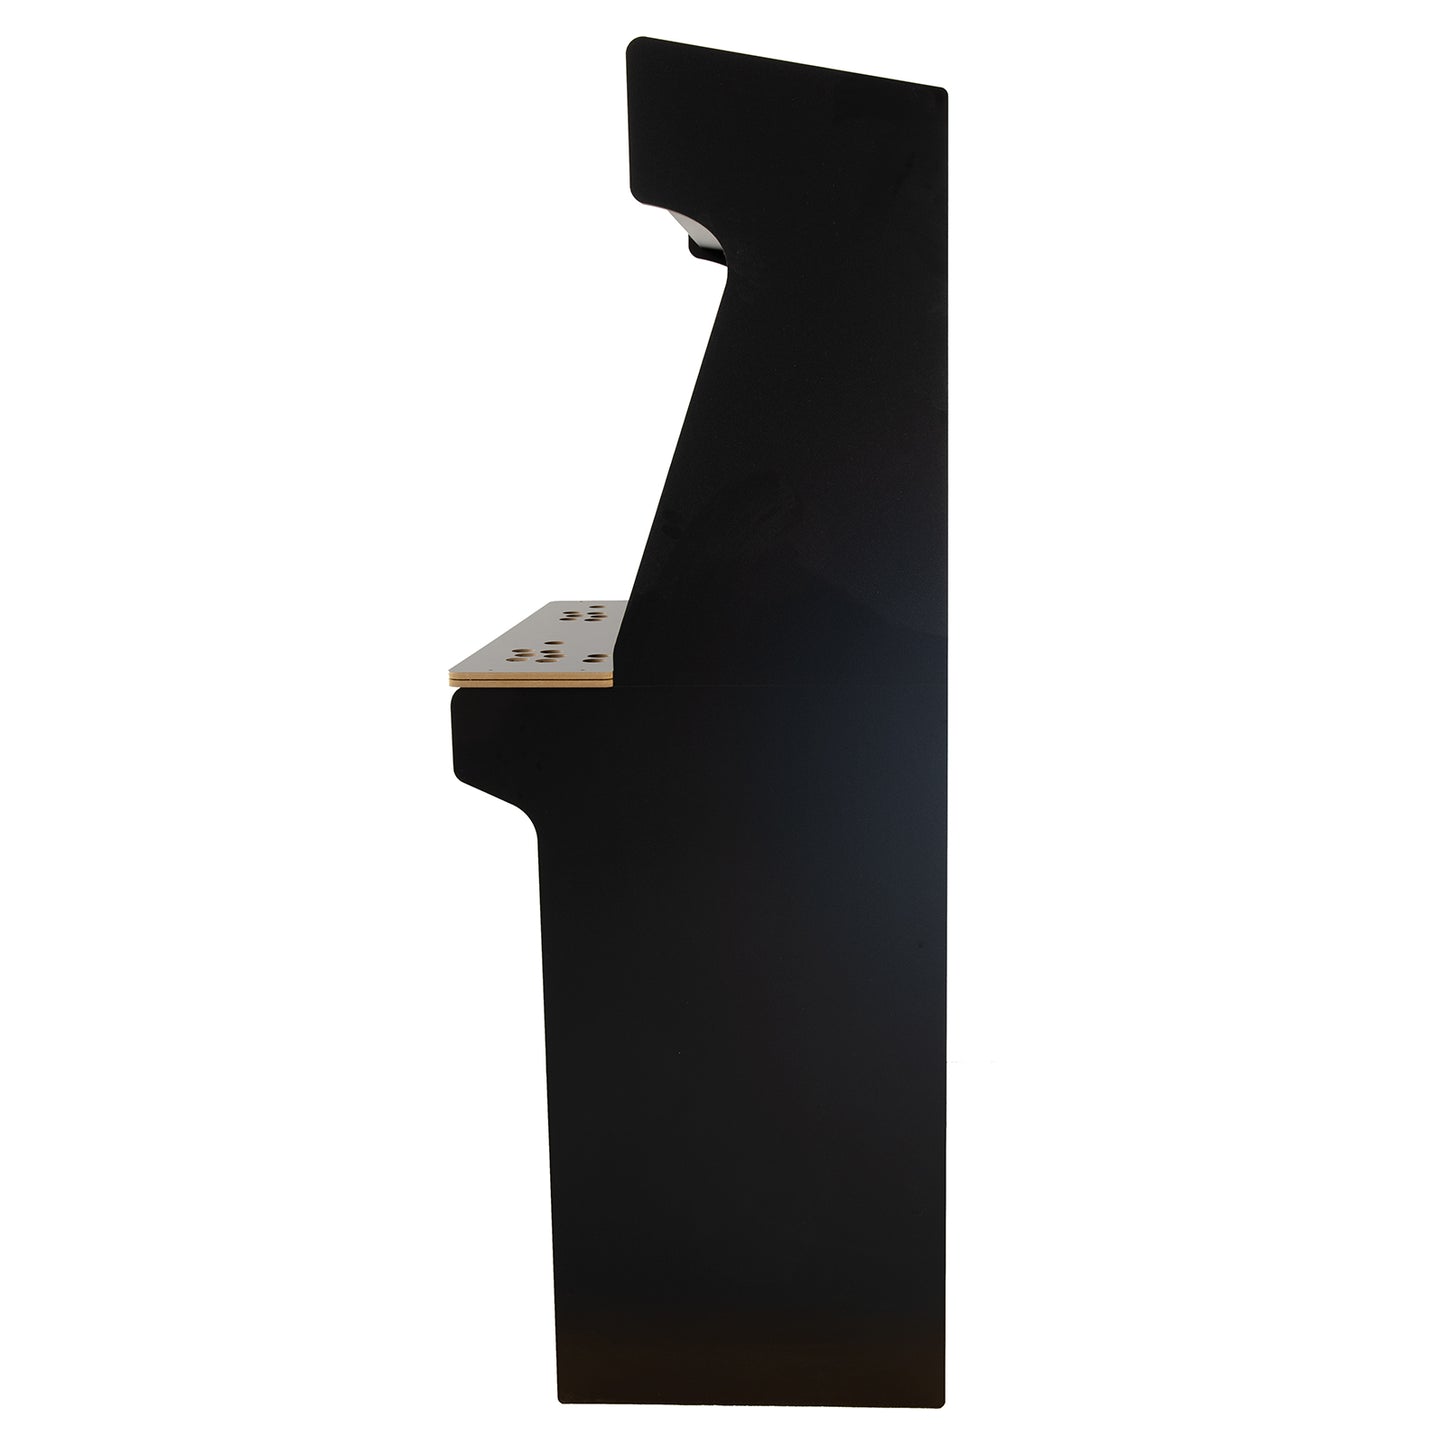 2 Player 27" Upright Arcade Cabinet Flat Pack Kit - Black